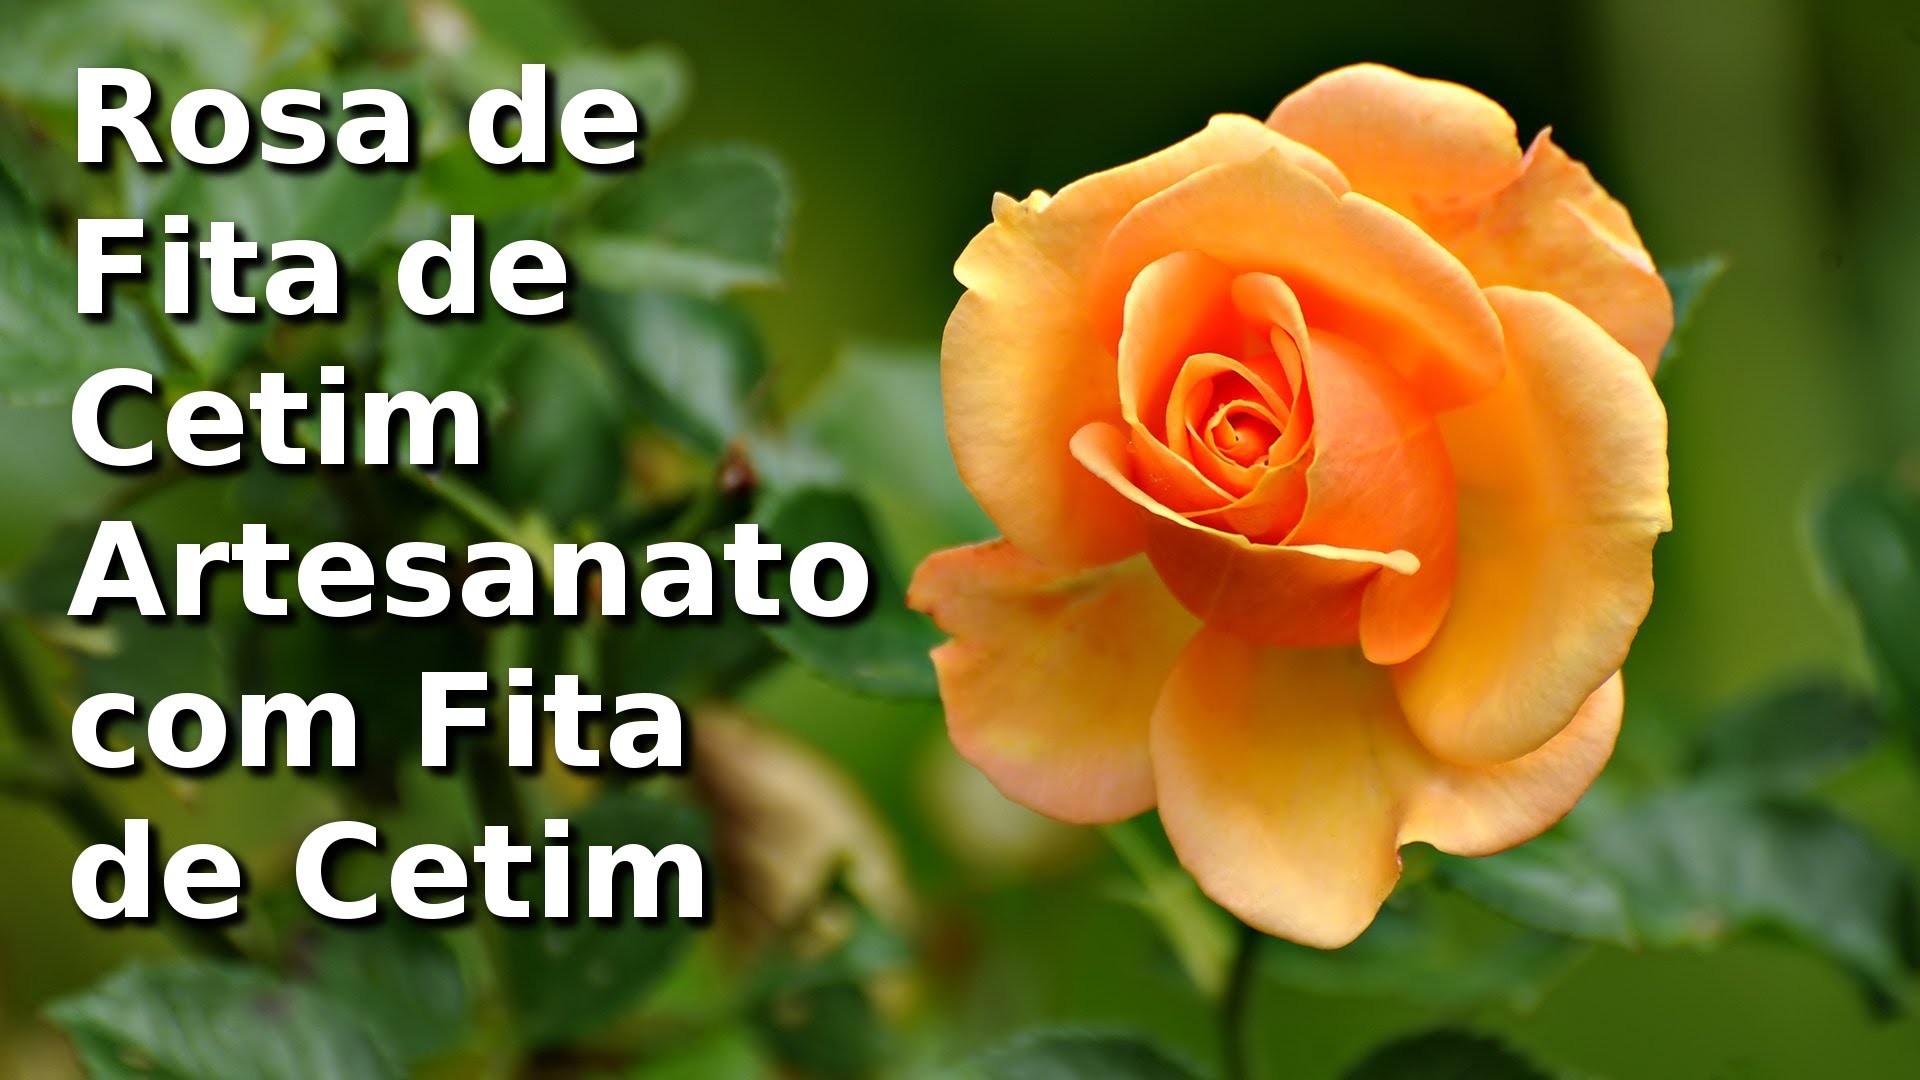 Rosa de Fita de Cetim - artesanato com fita de cetim